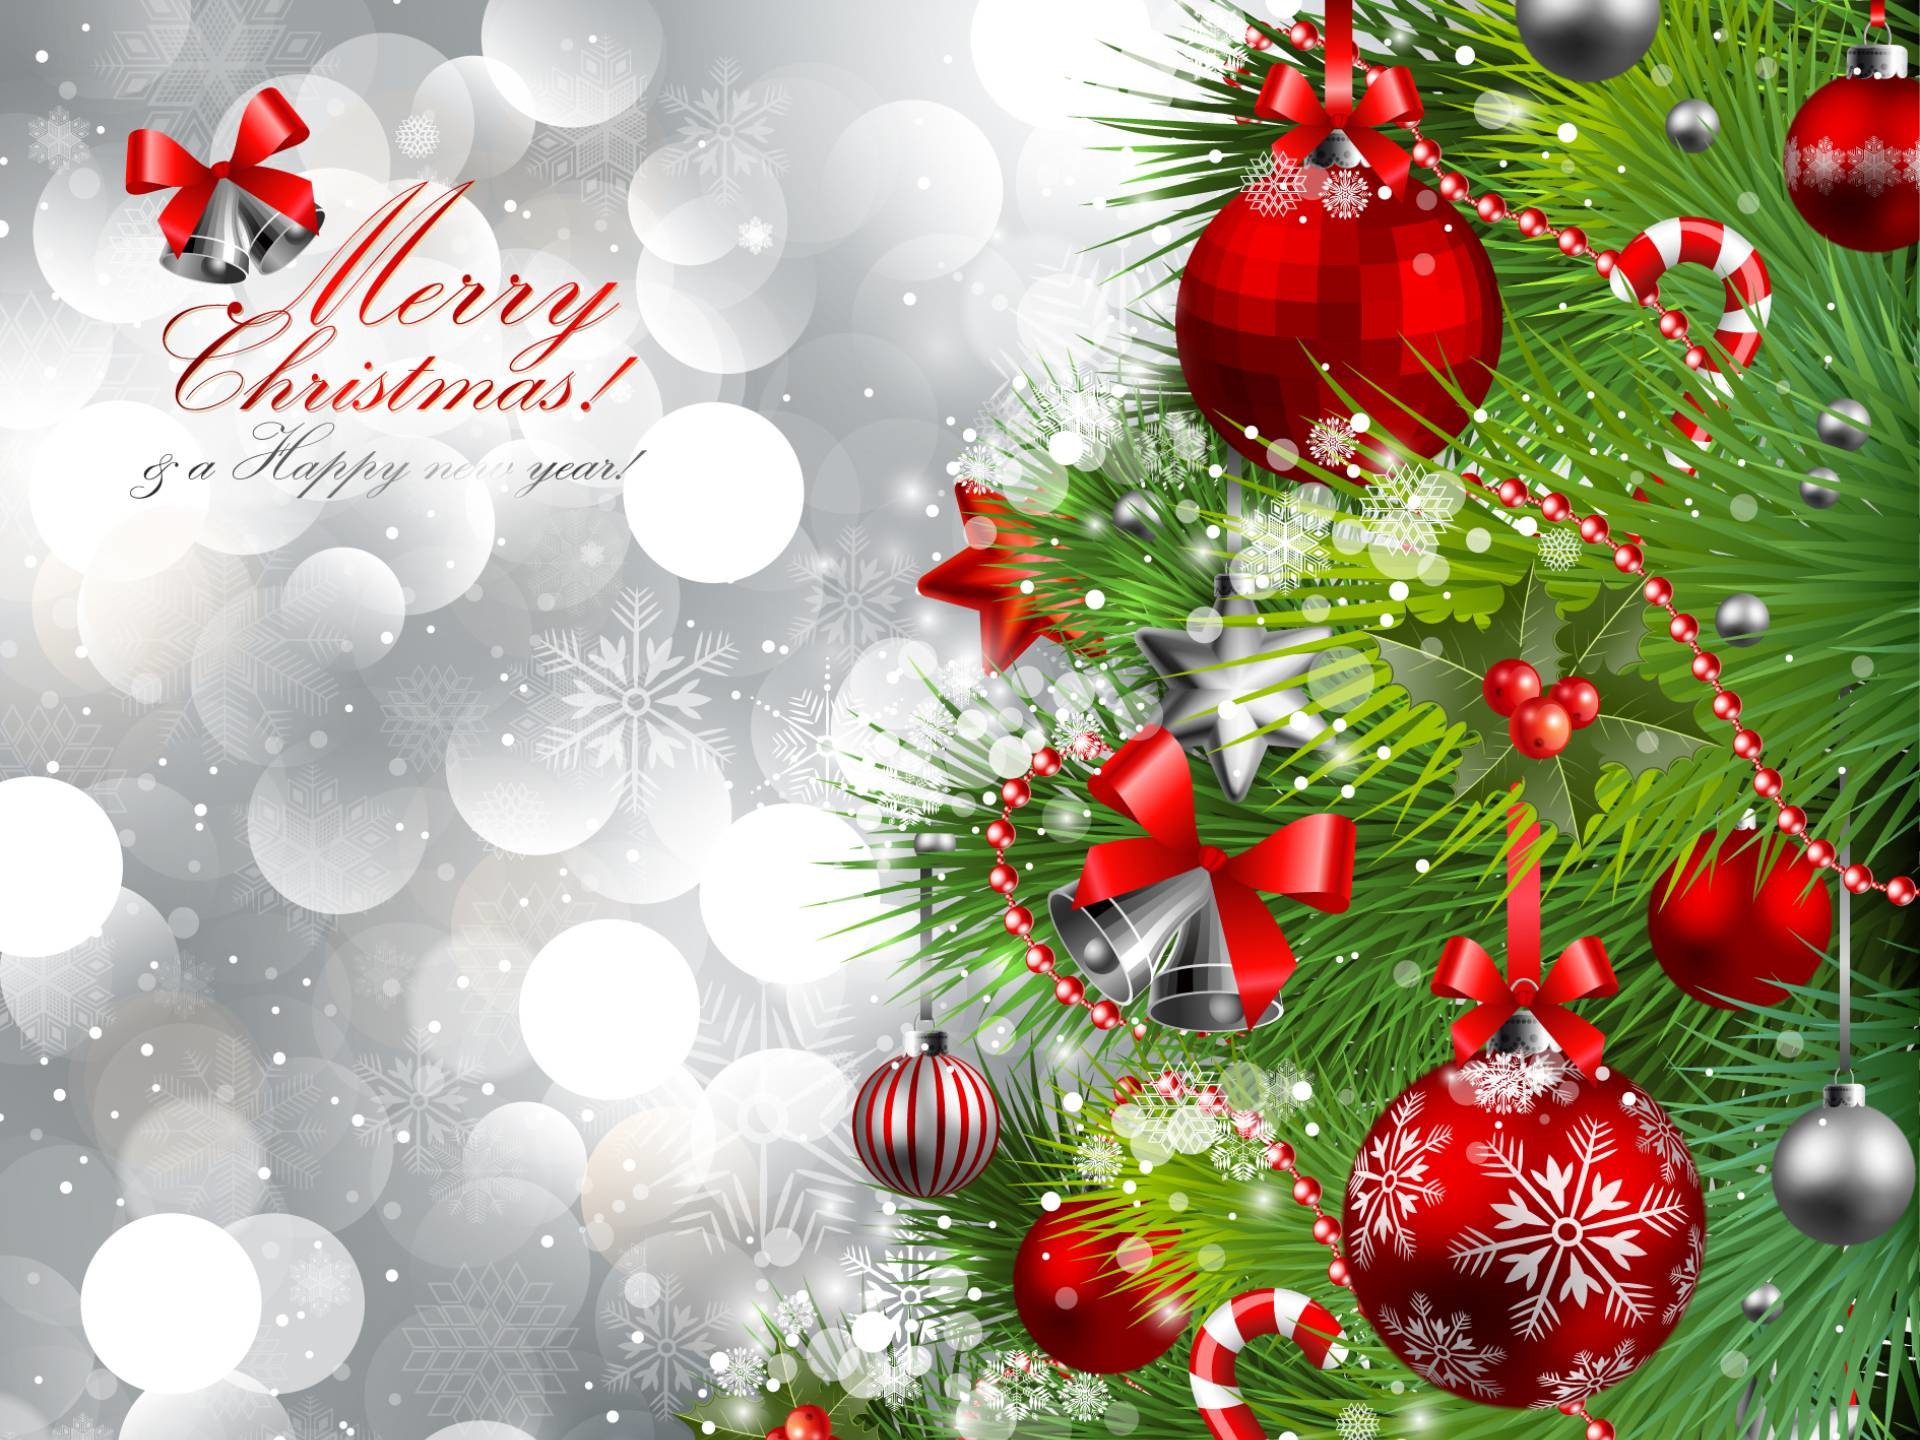 1920x1440 Merry Christmas - Christmas Wallpaper (32793659) - Fanpop